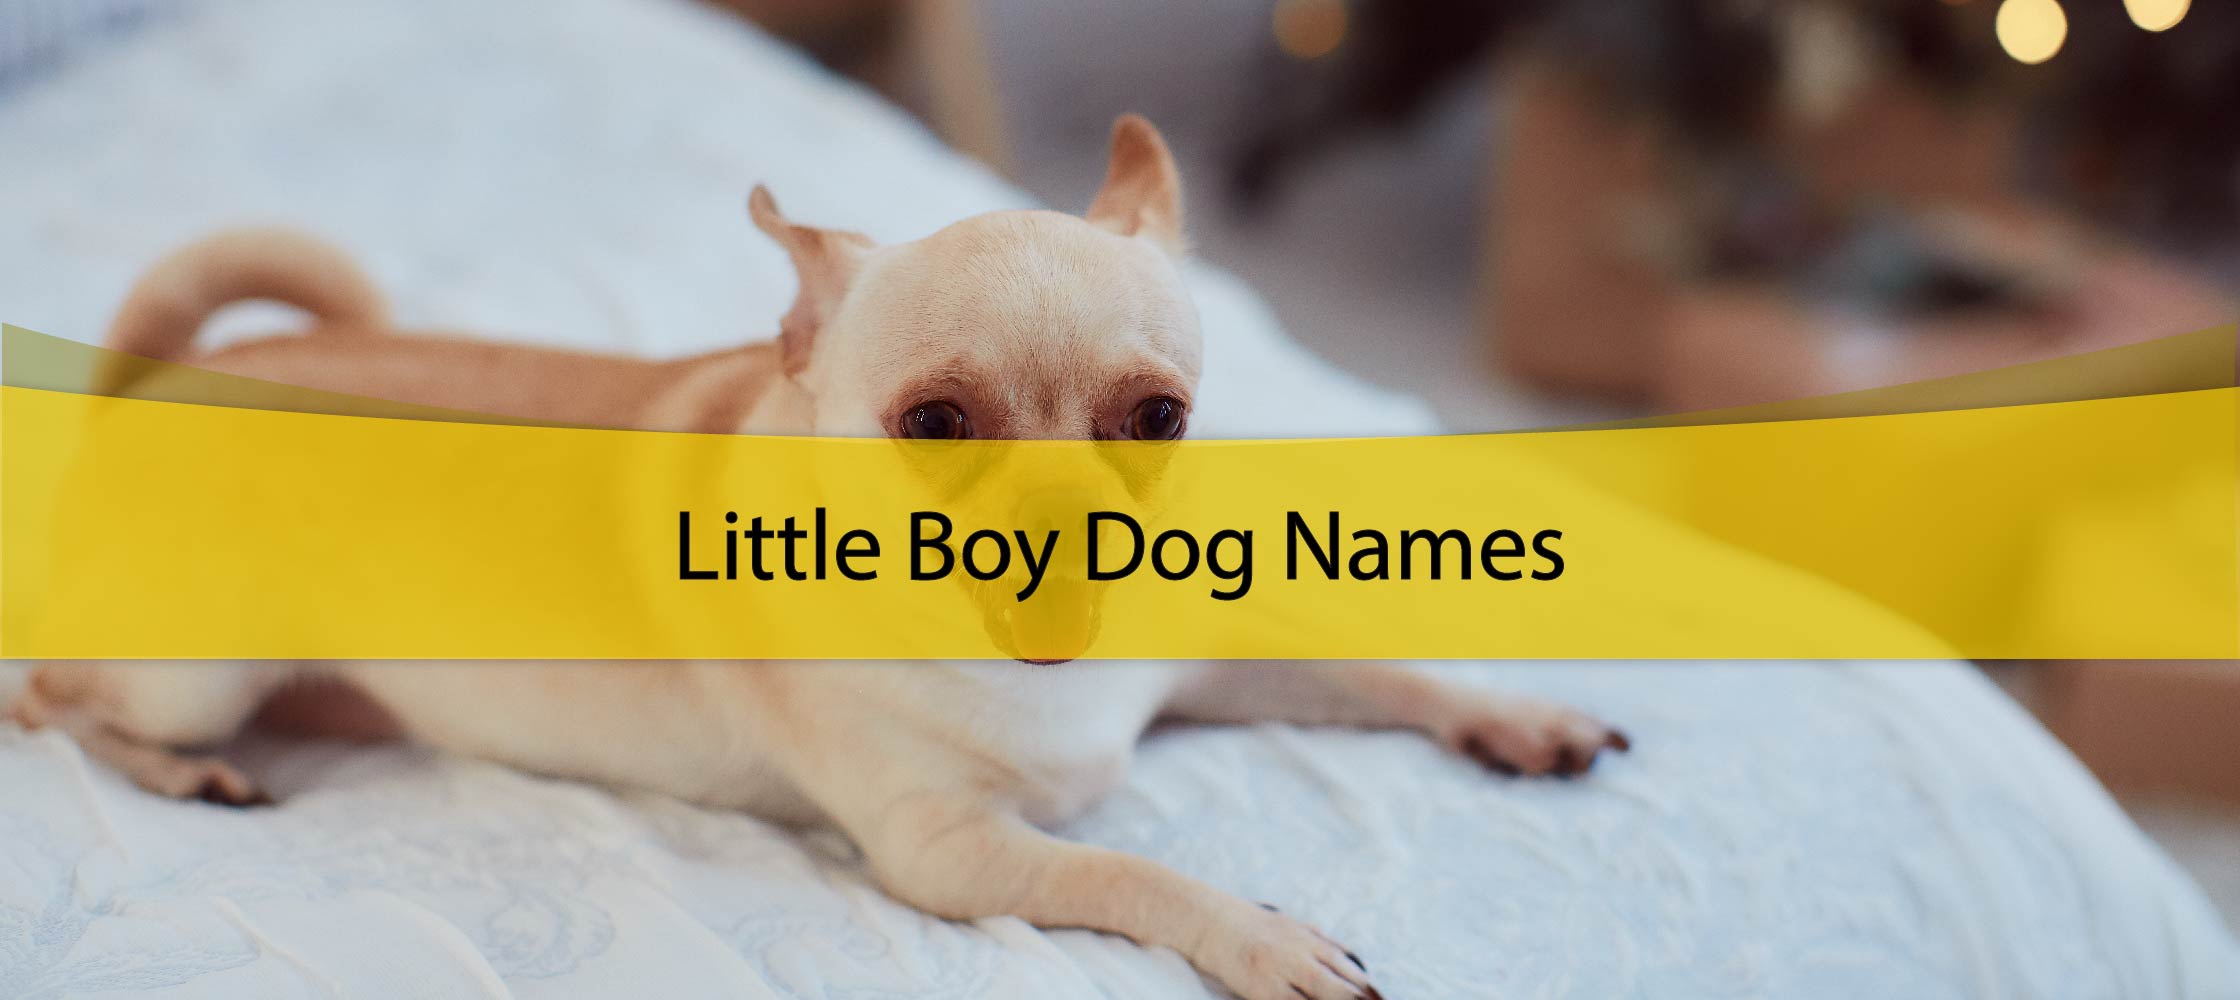 Little Boy Dog Names